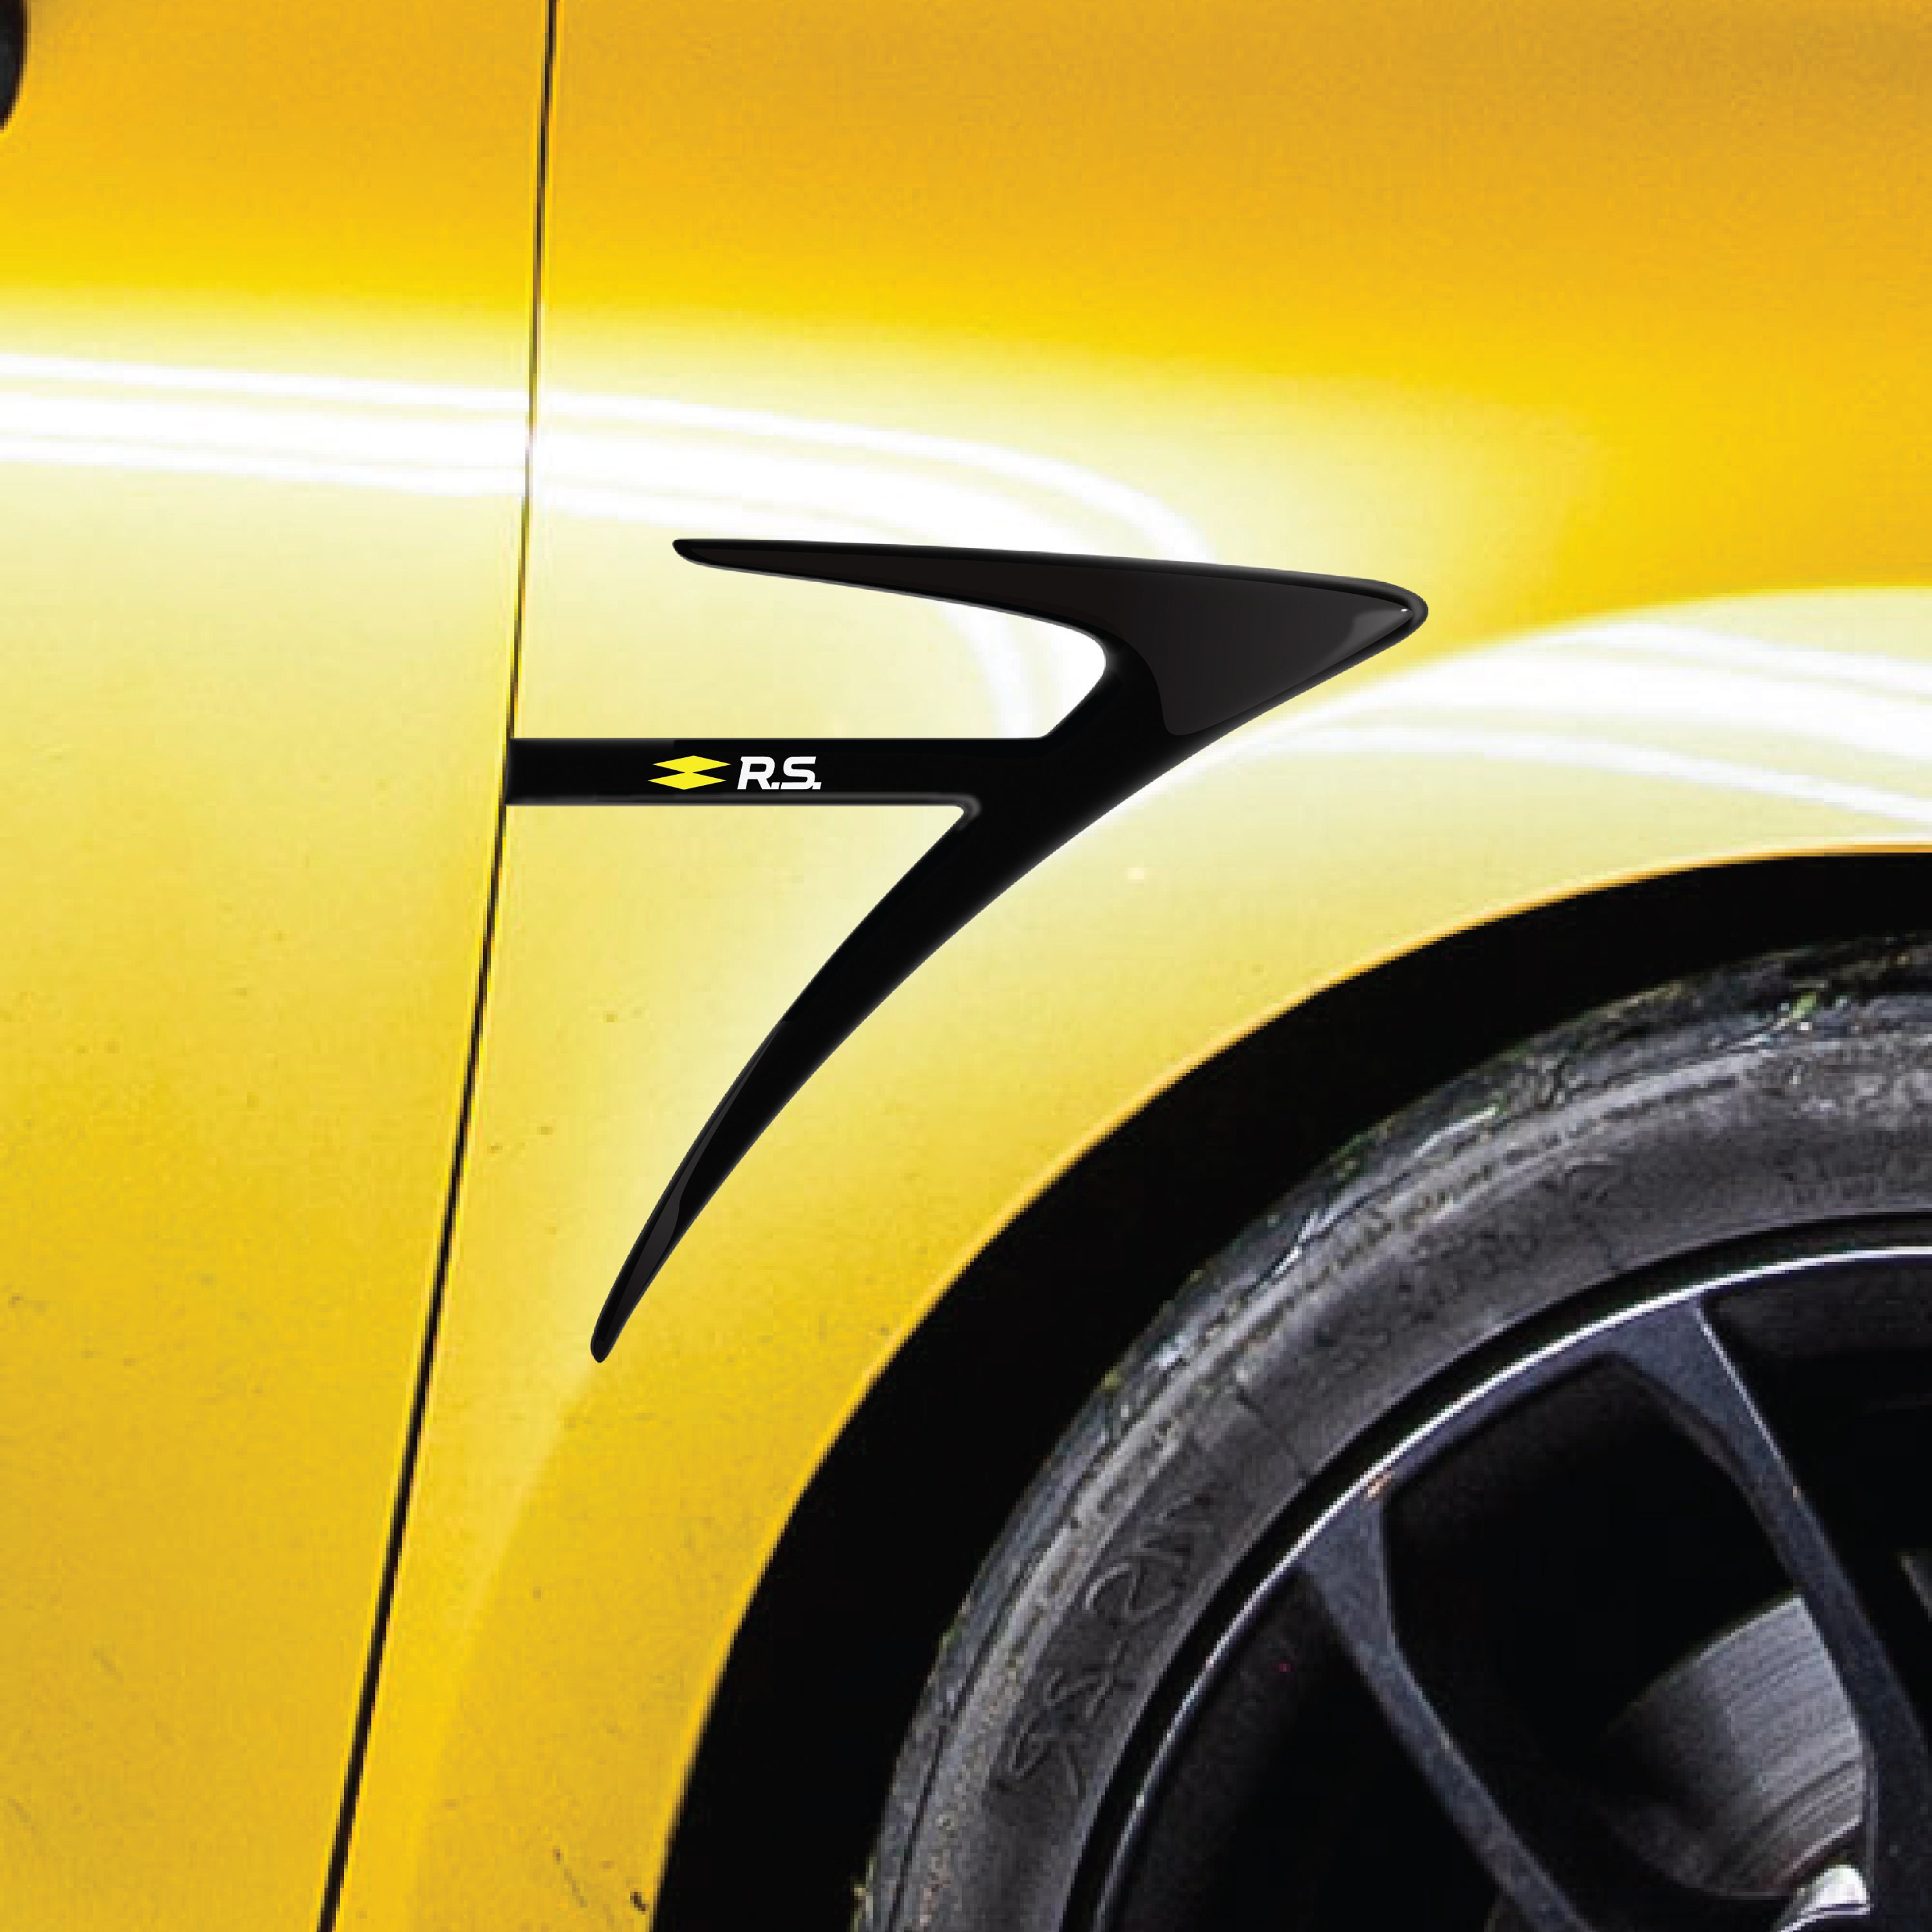 Kit Autocollants Renault Sport v1